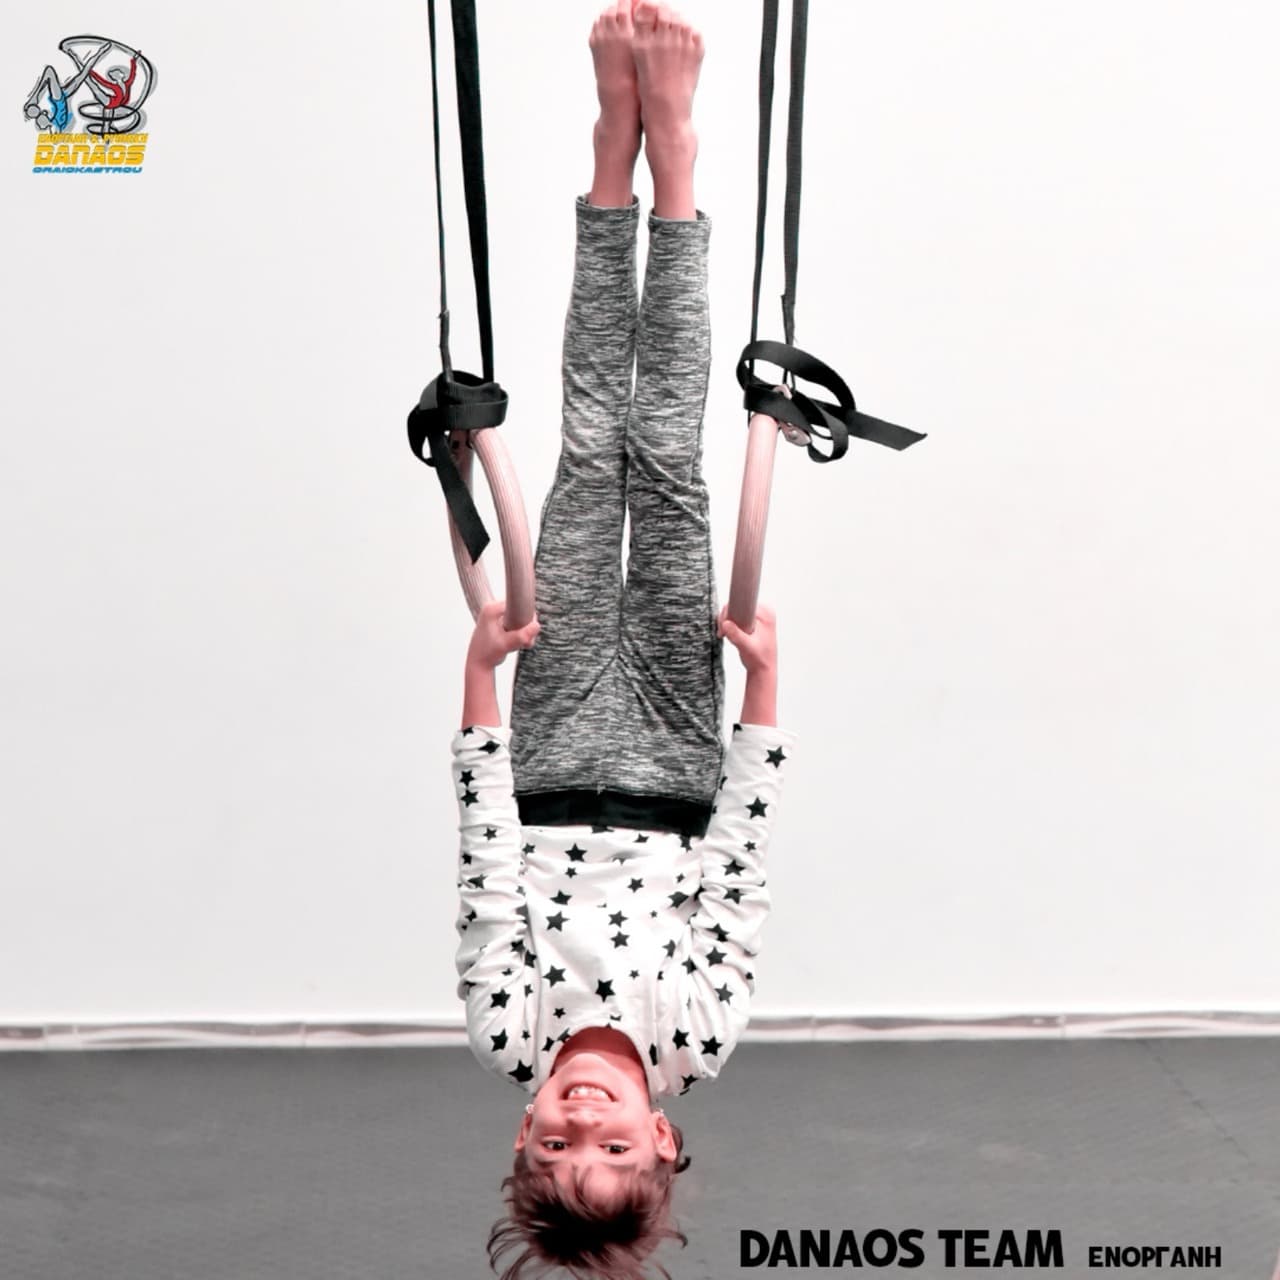 danaos-oraiokastro-enorgani-gimnastiki-sportshunter-11